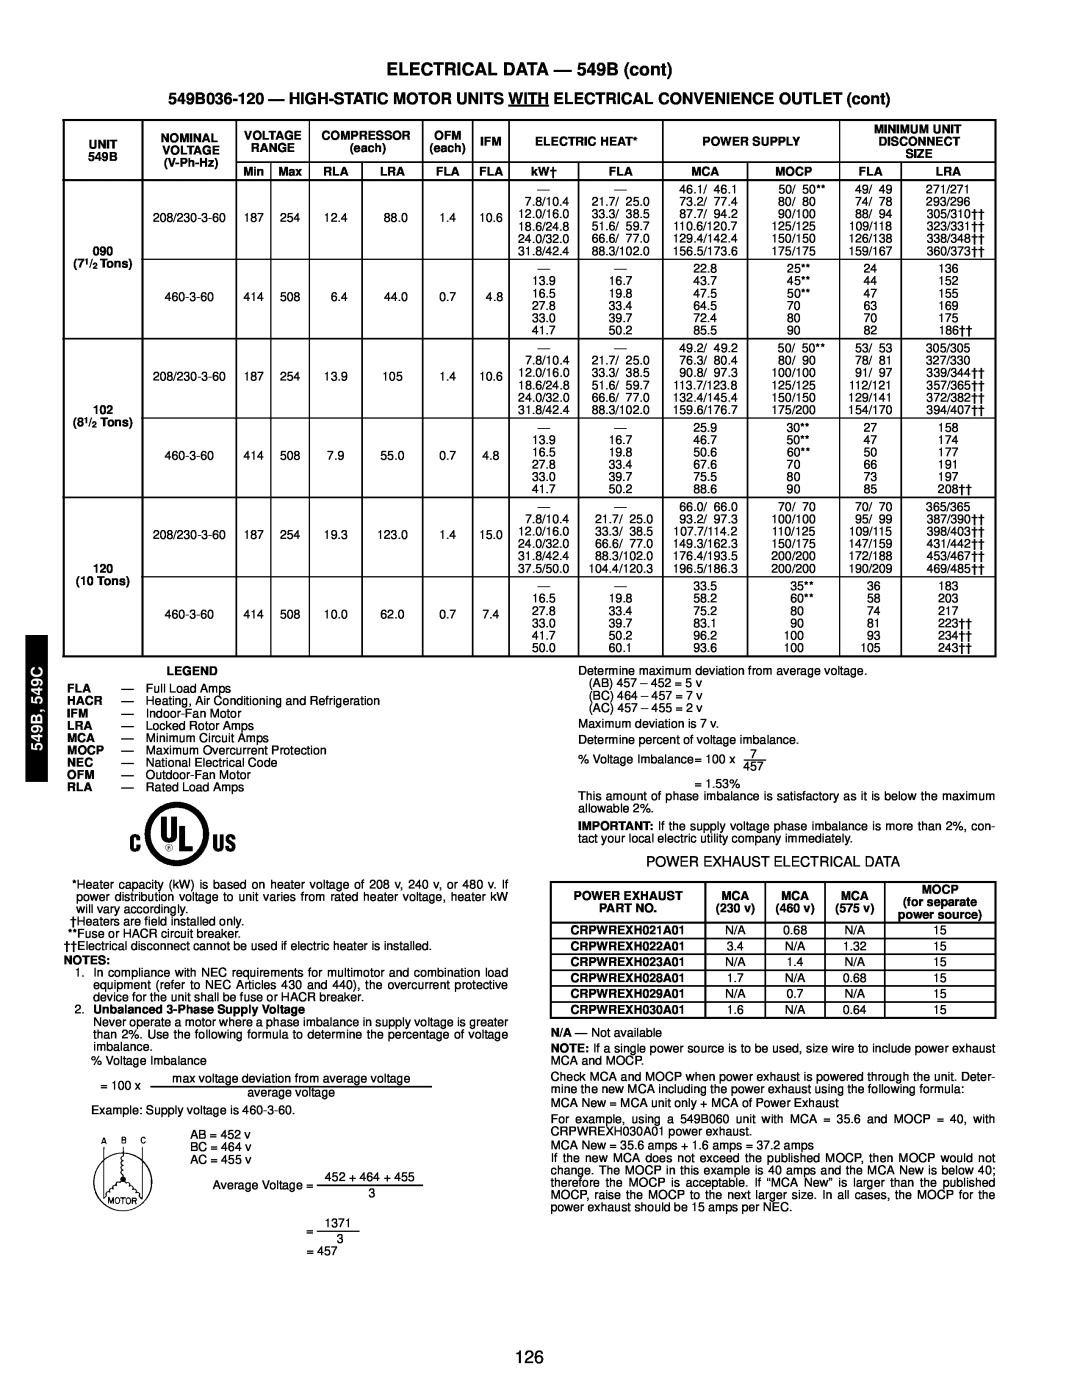 Bryant manual ELECTRICAL DATA — 549B cont, 549B, 549C, 46.1 